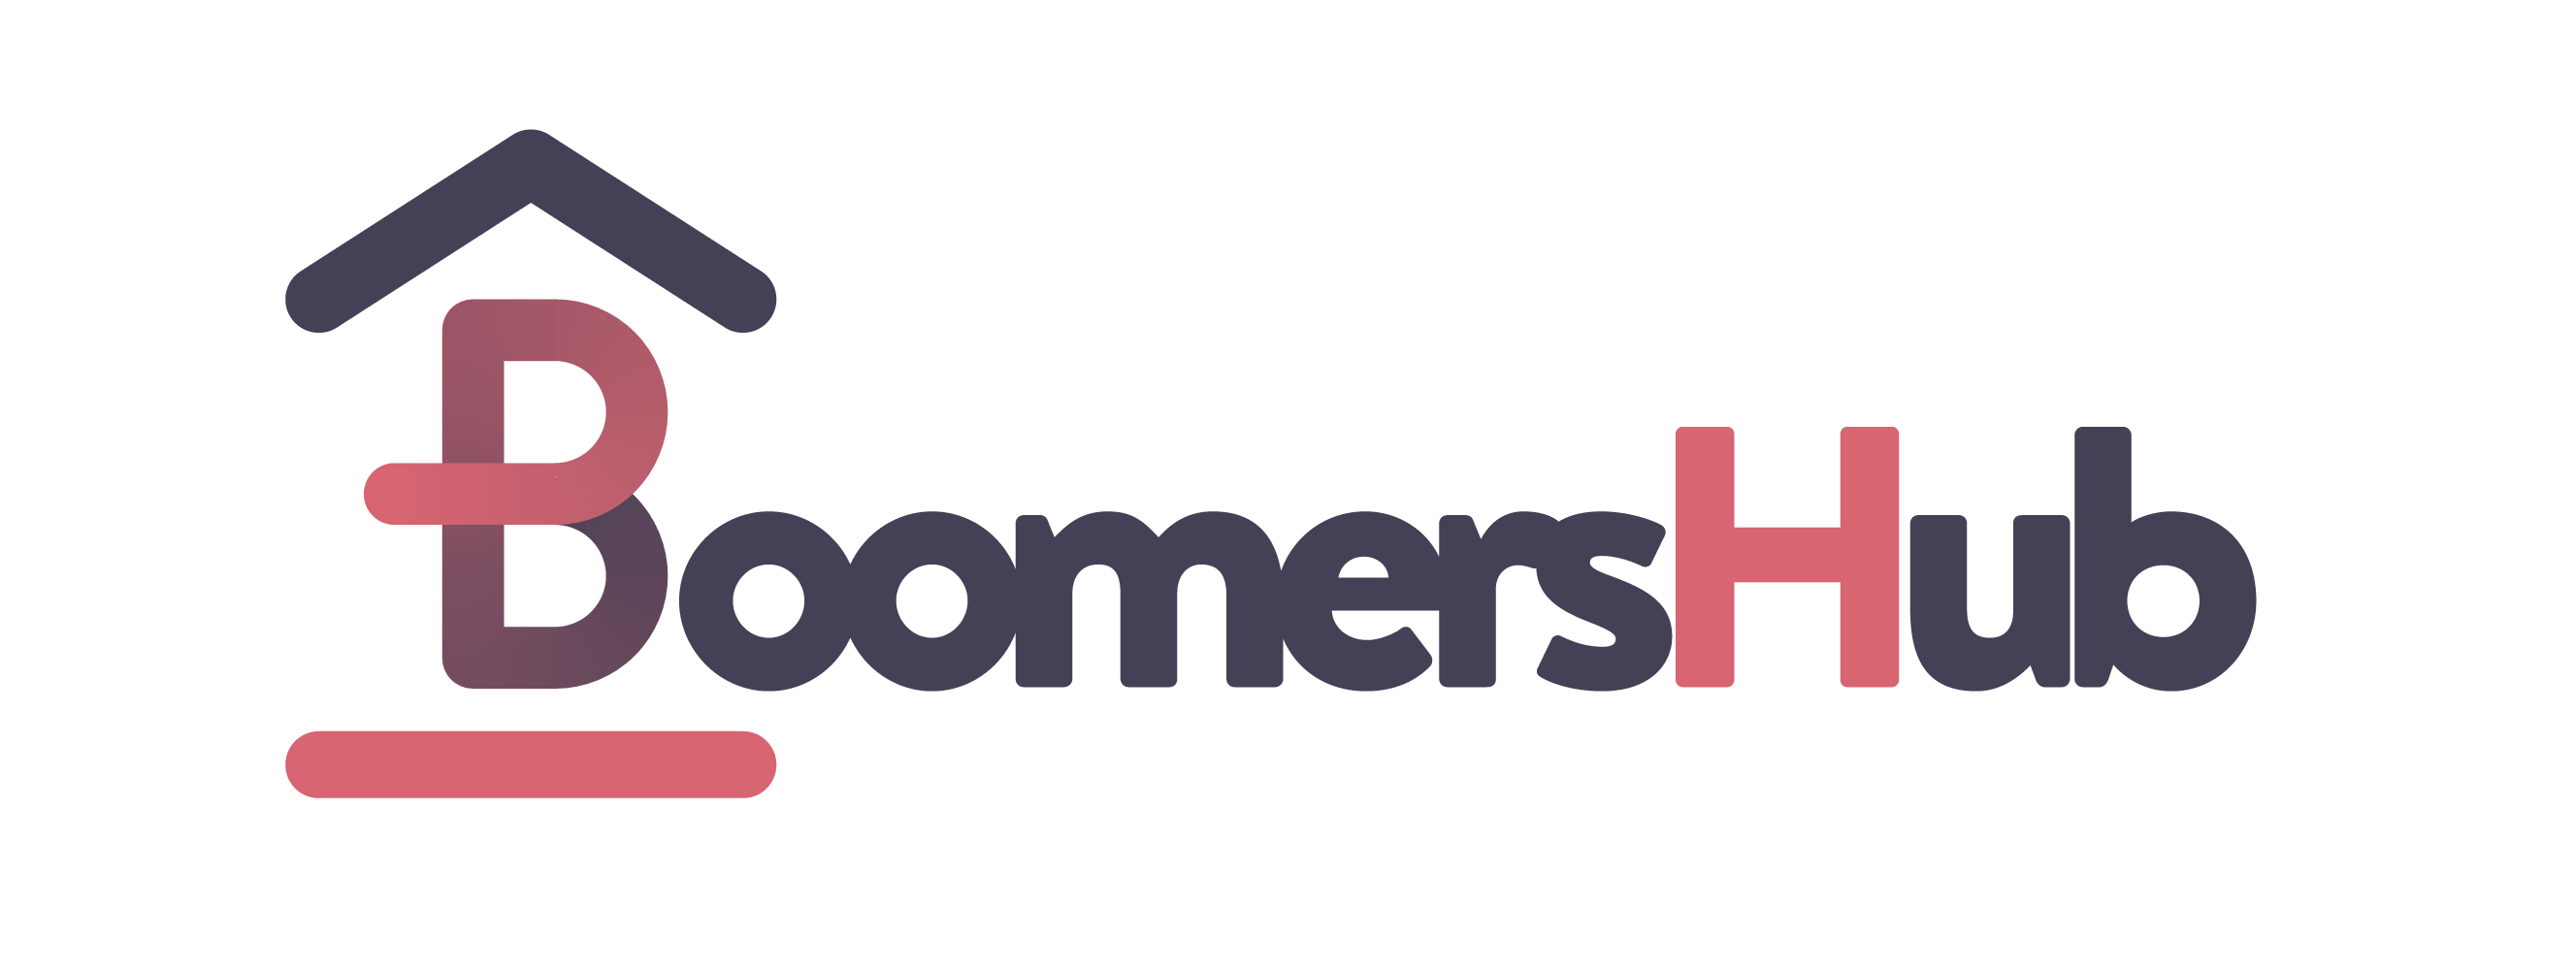 BoomersHub Blog